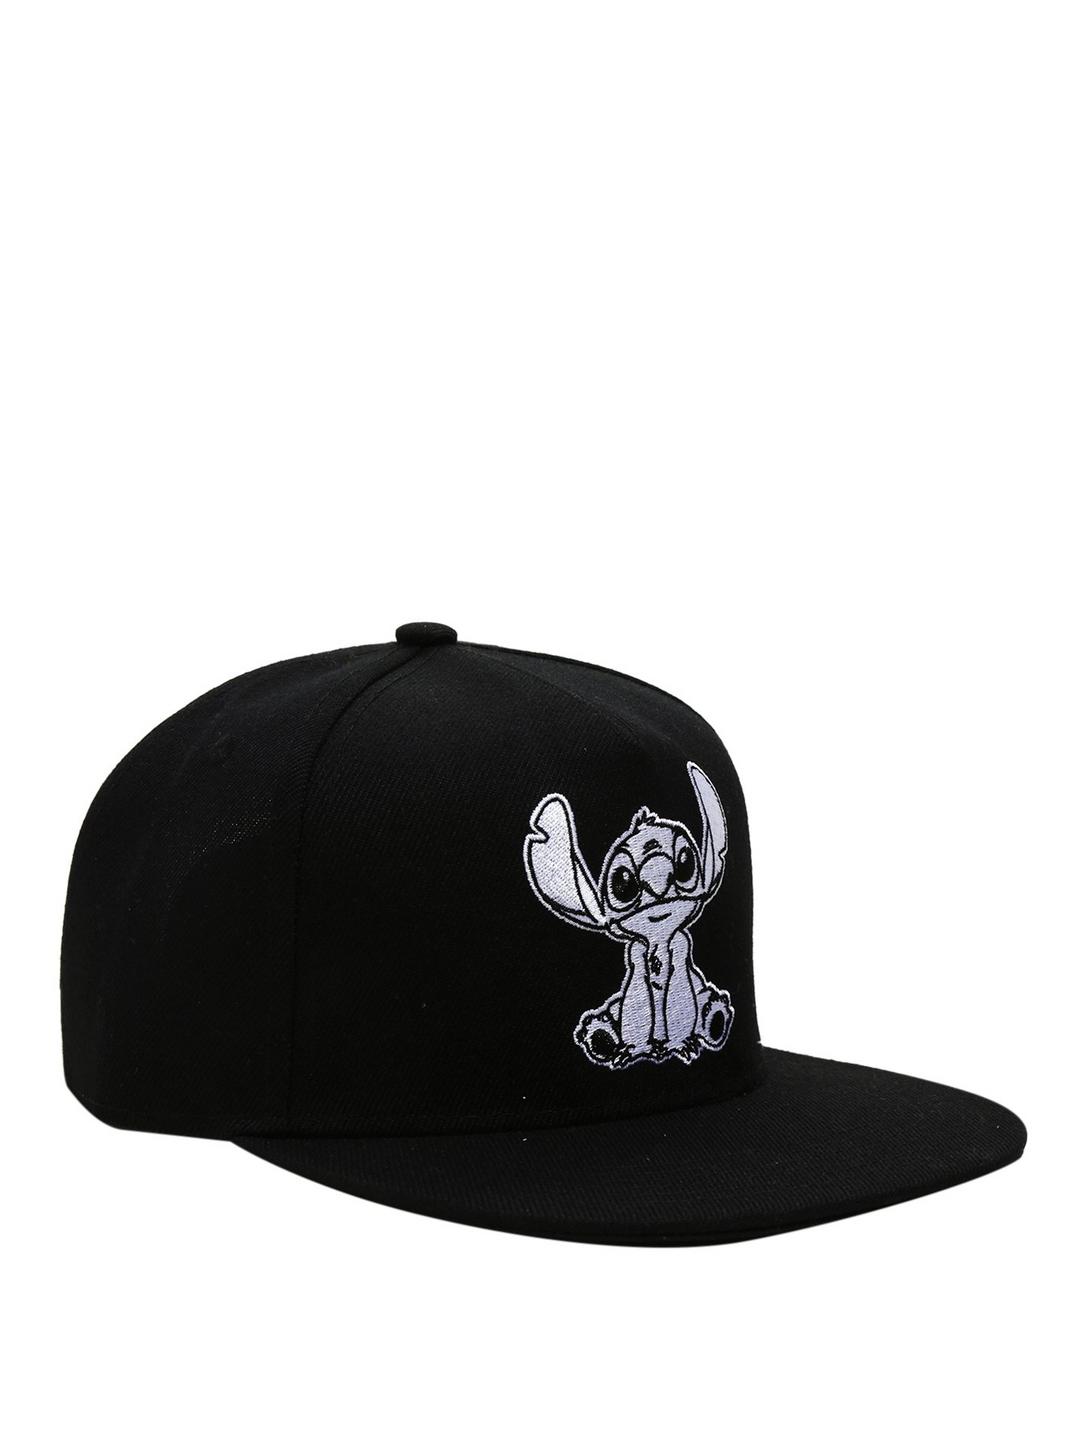 Disney Lilo & Stitch Black & White Snapback Hat, , hi-res